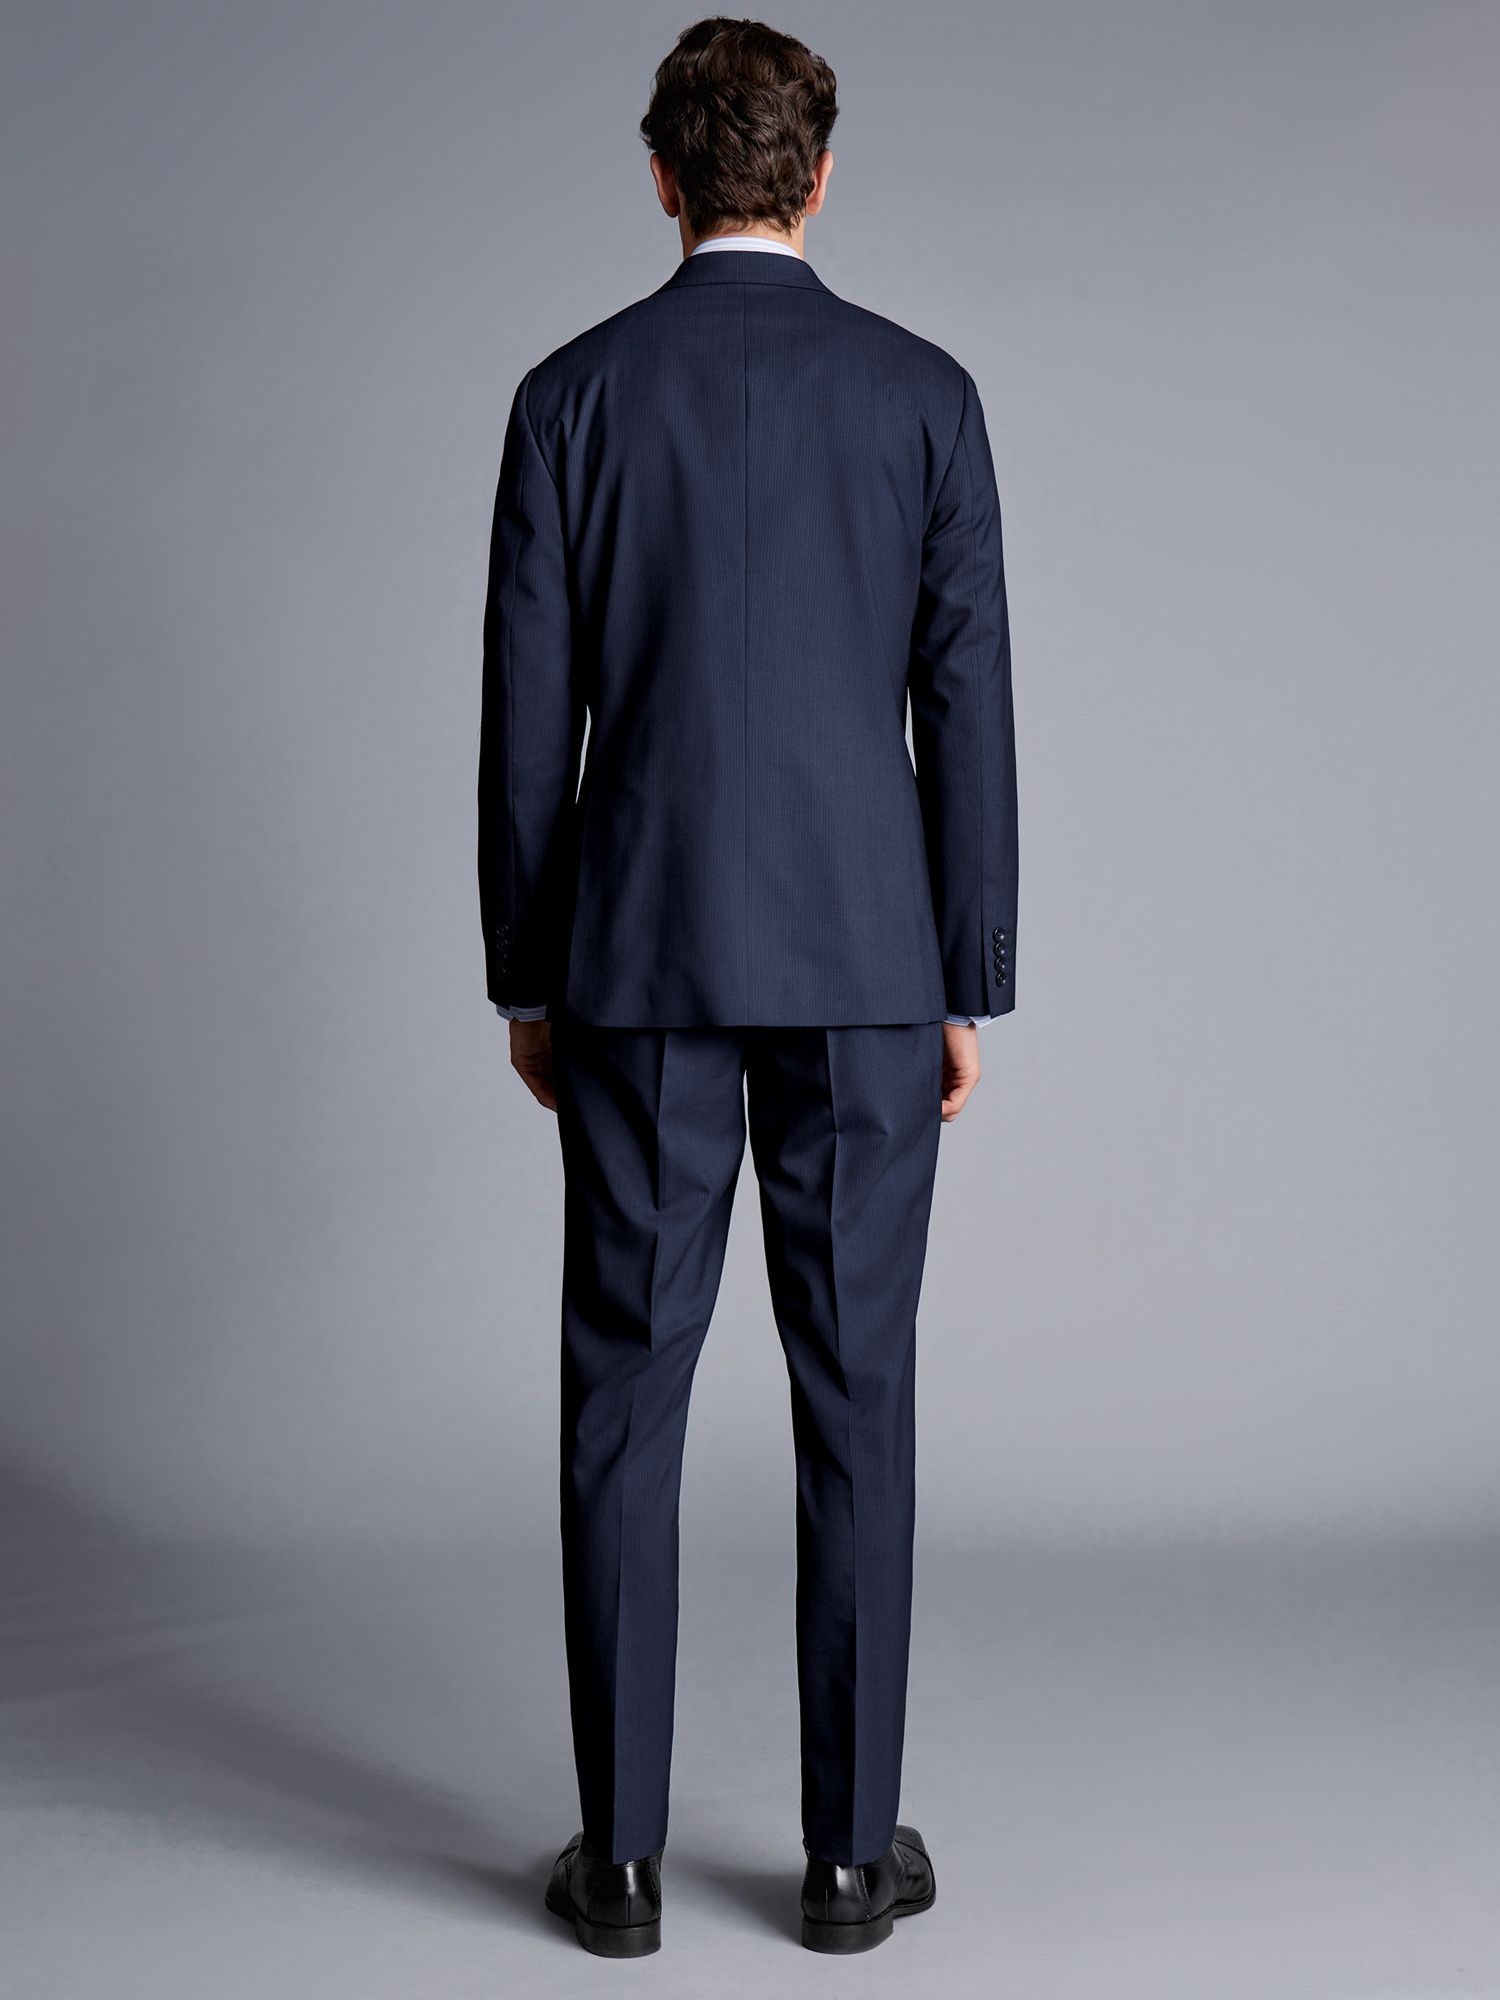 Charles Tyrwhitt Classic Stripe Suit Jacket, Navy at John Lewis & Partners